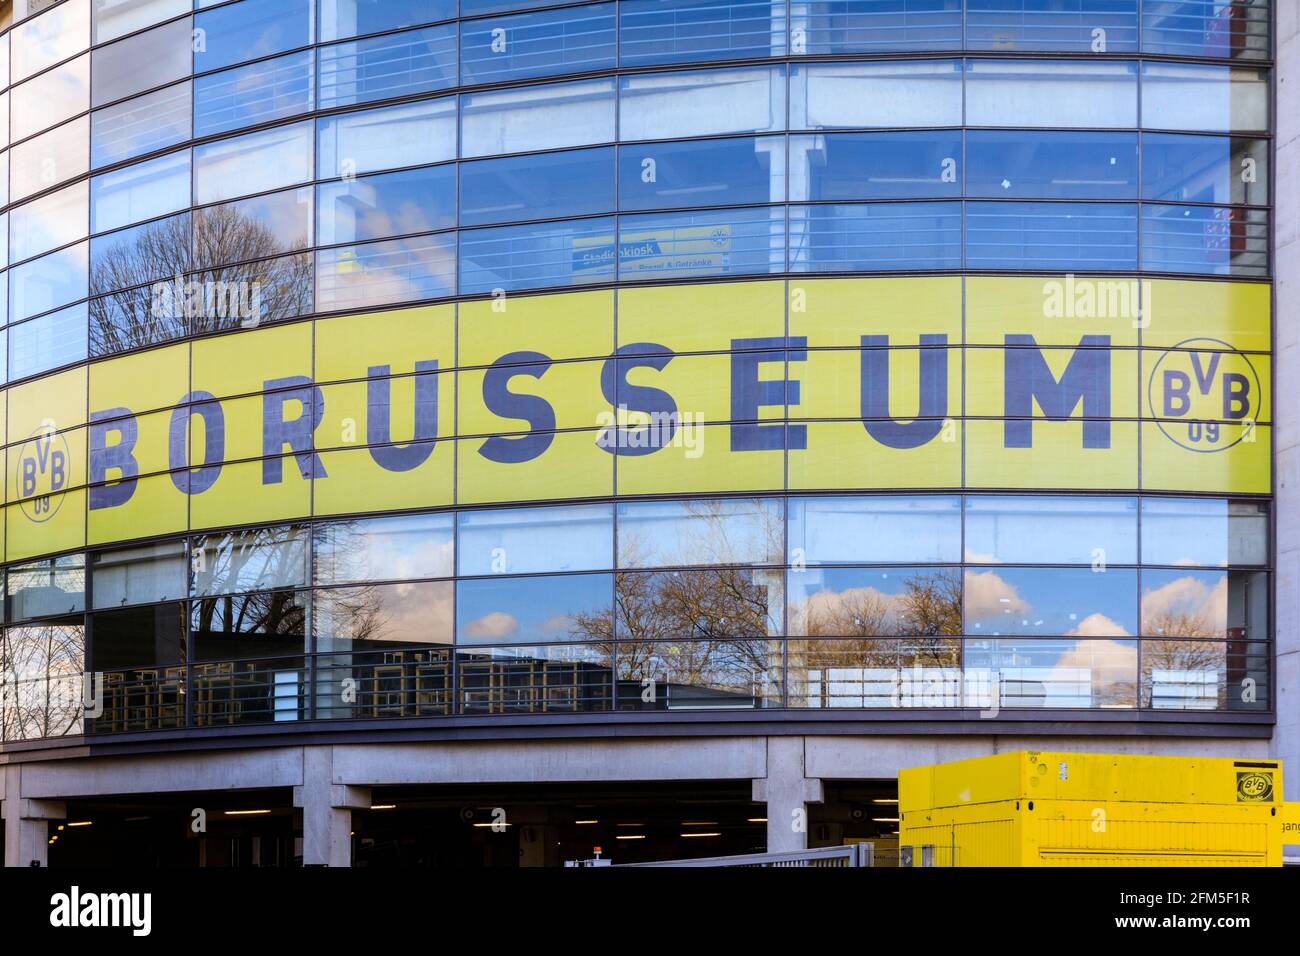 Borusseum, BVB 09 Borussia Dortmund football club museum at Signal Iduna stadium, Dortmund Germany Stock Photo